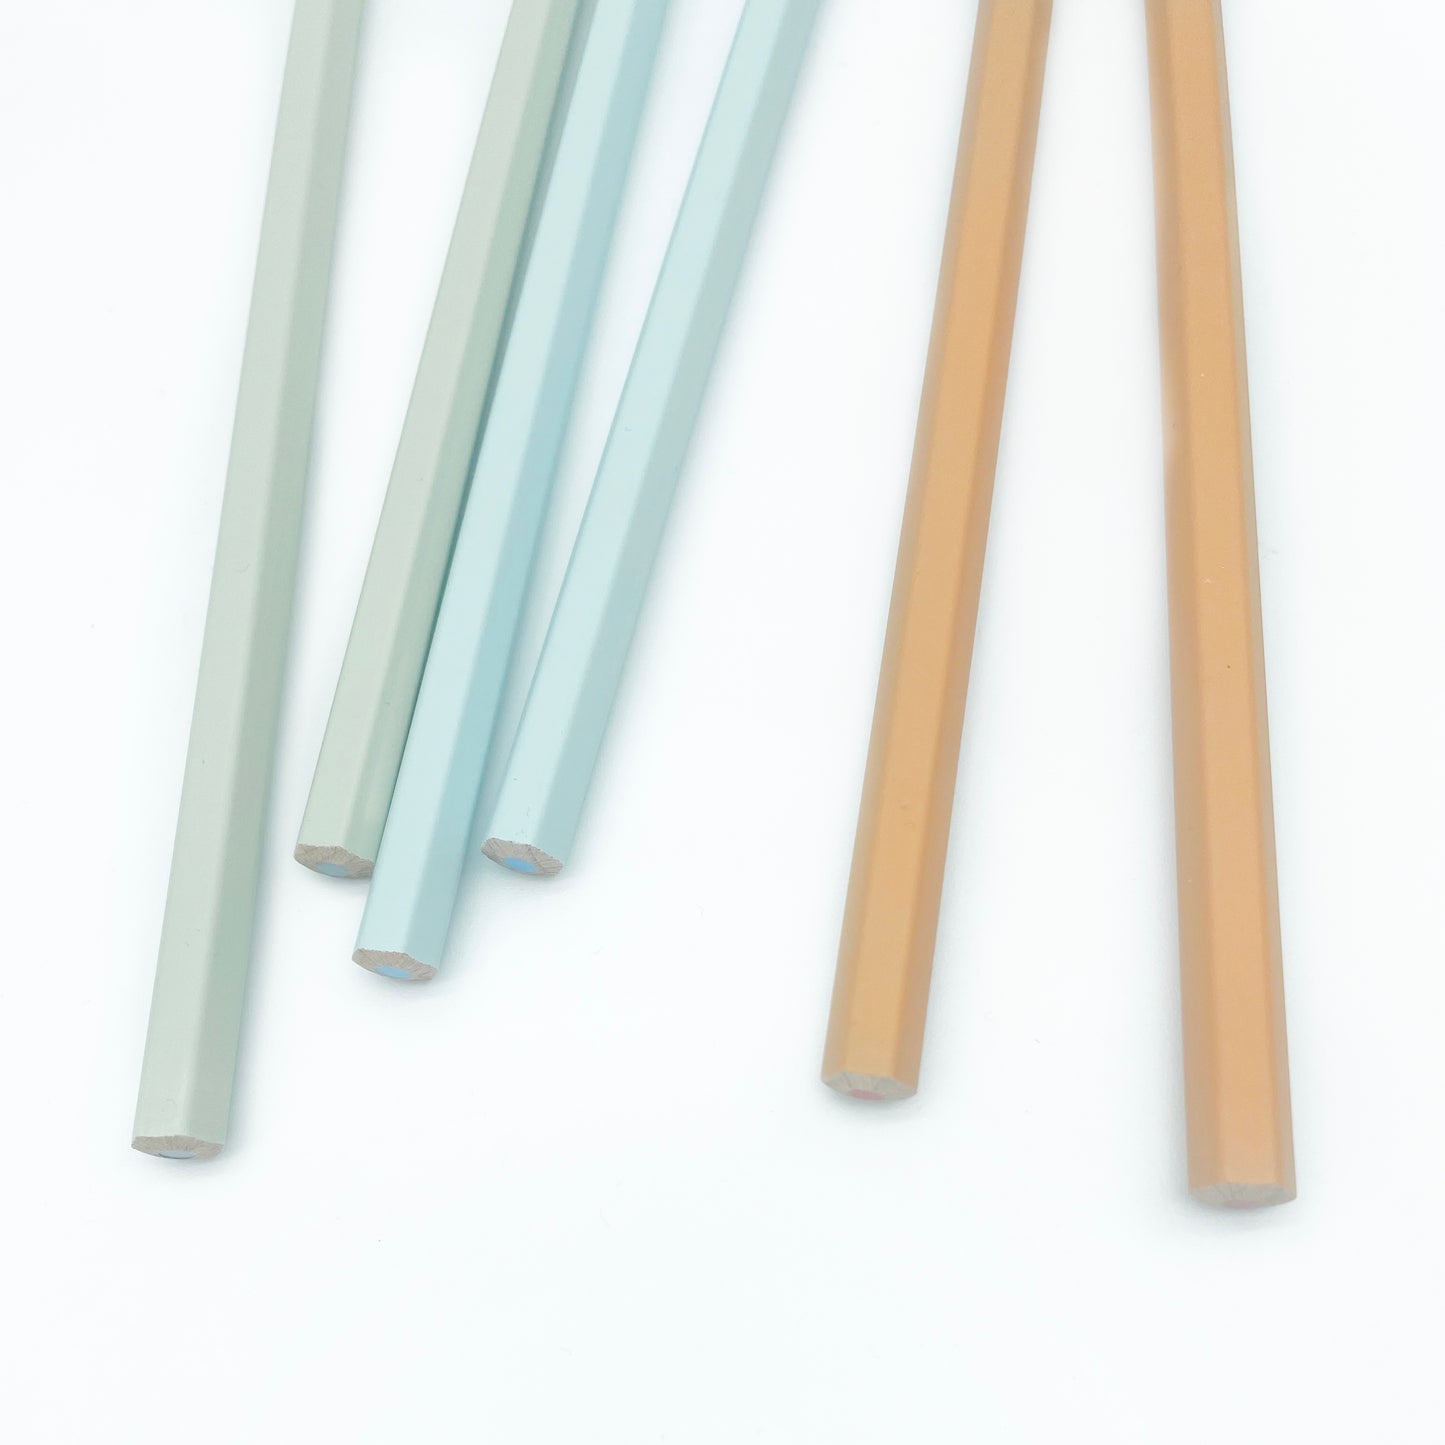 Midori MD Coloured Pencil Set